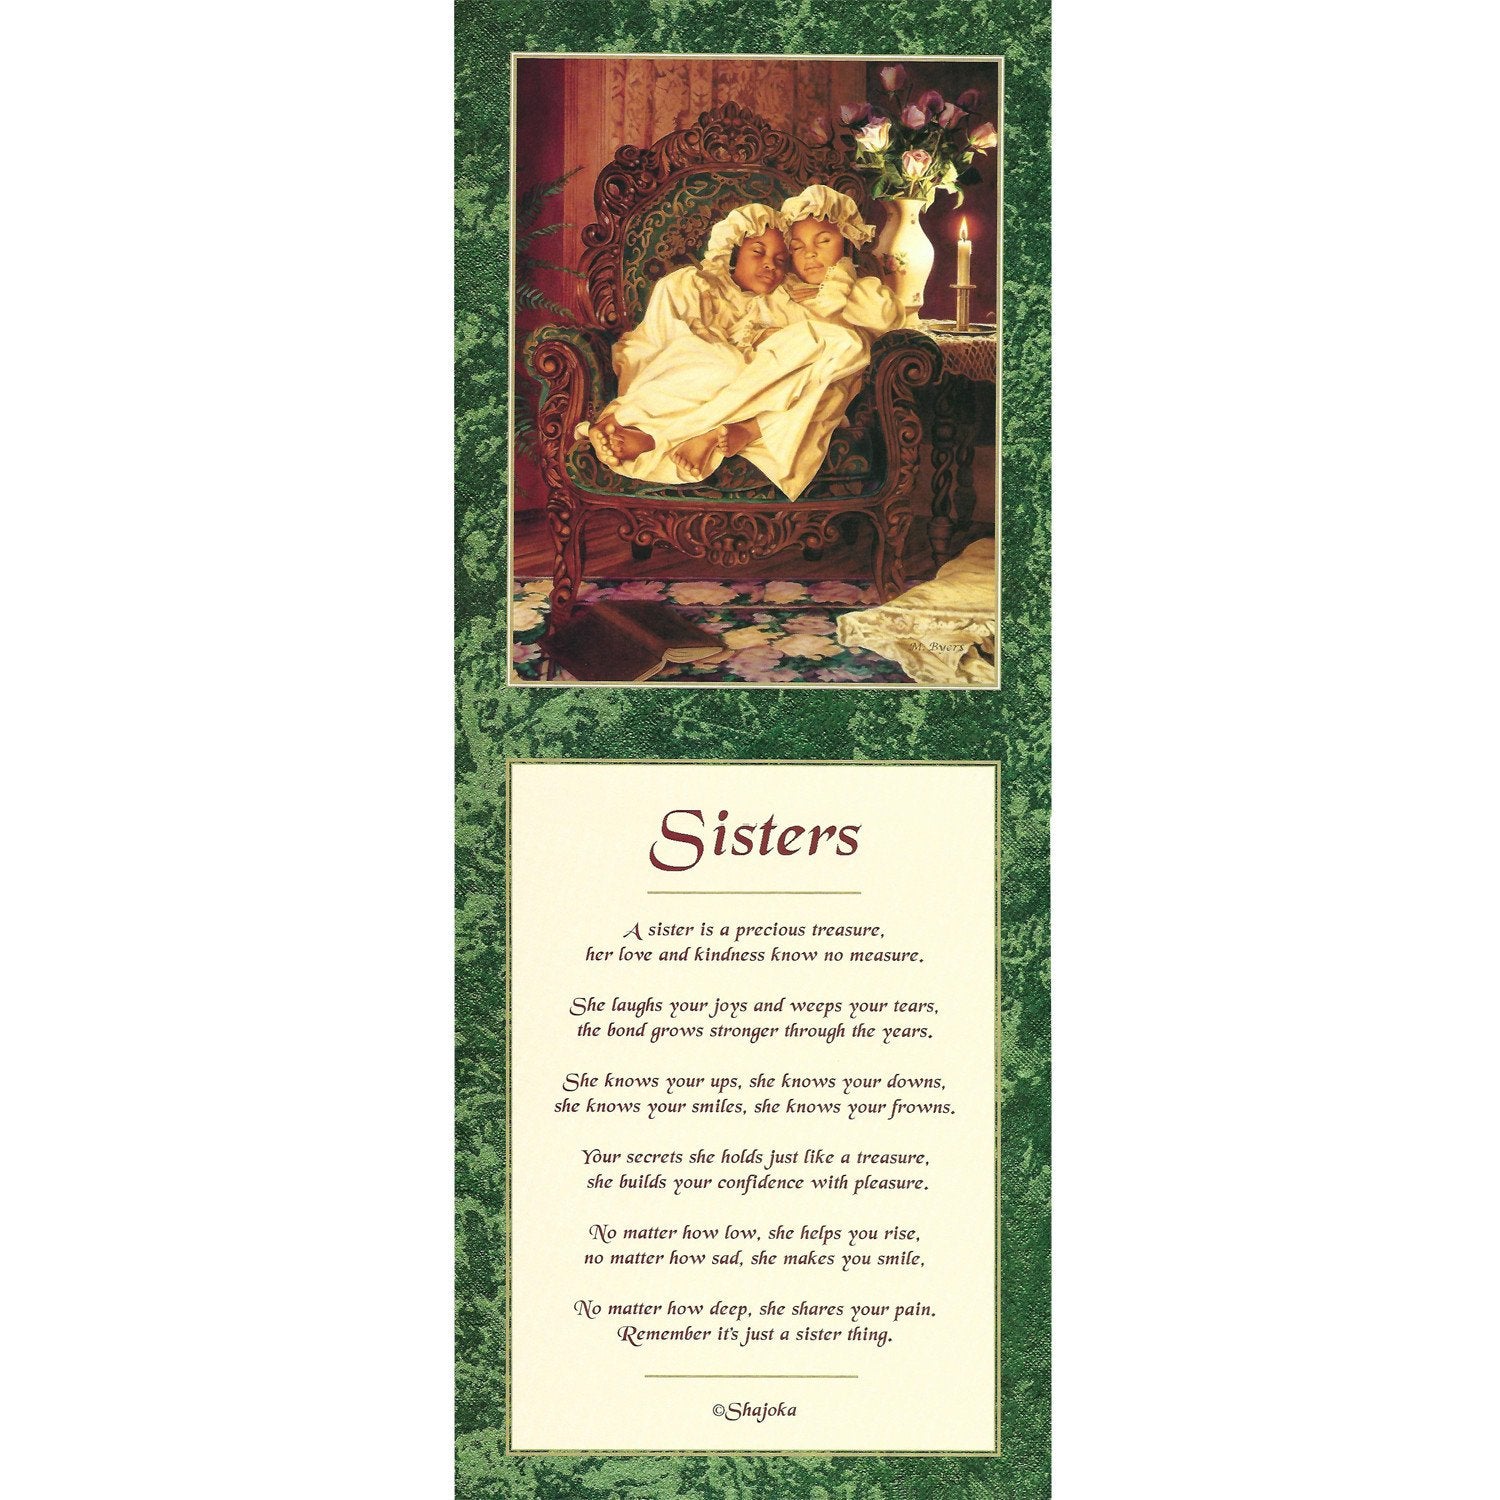 1 of 2: Sisters by Melinda Byers and Shahida (Literary Art Print)